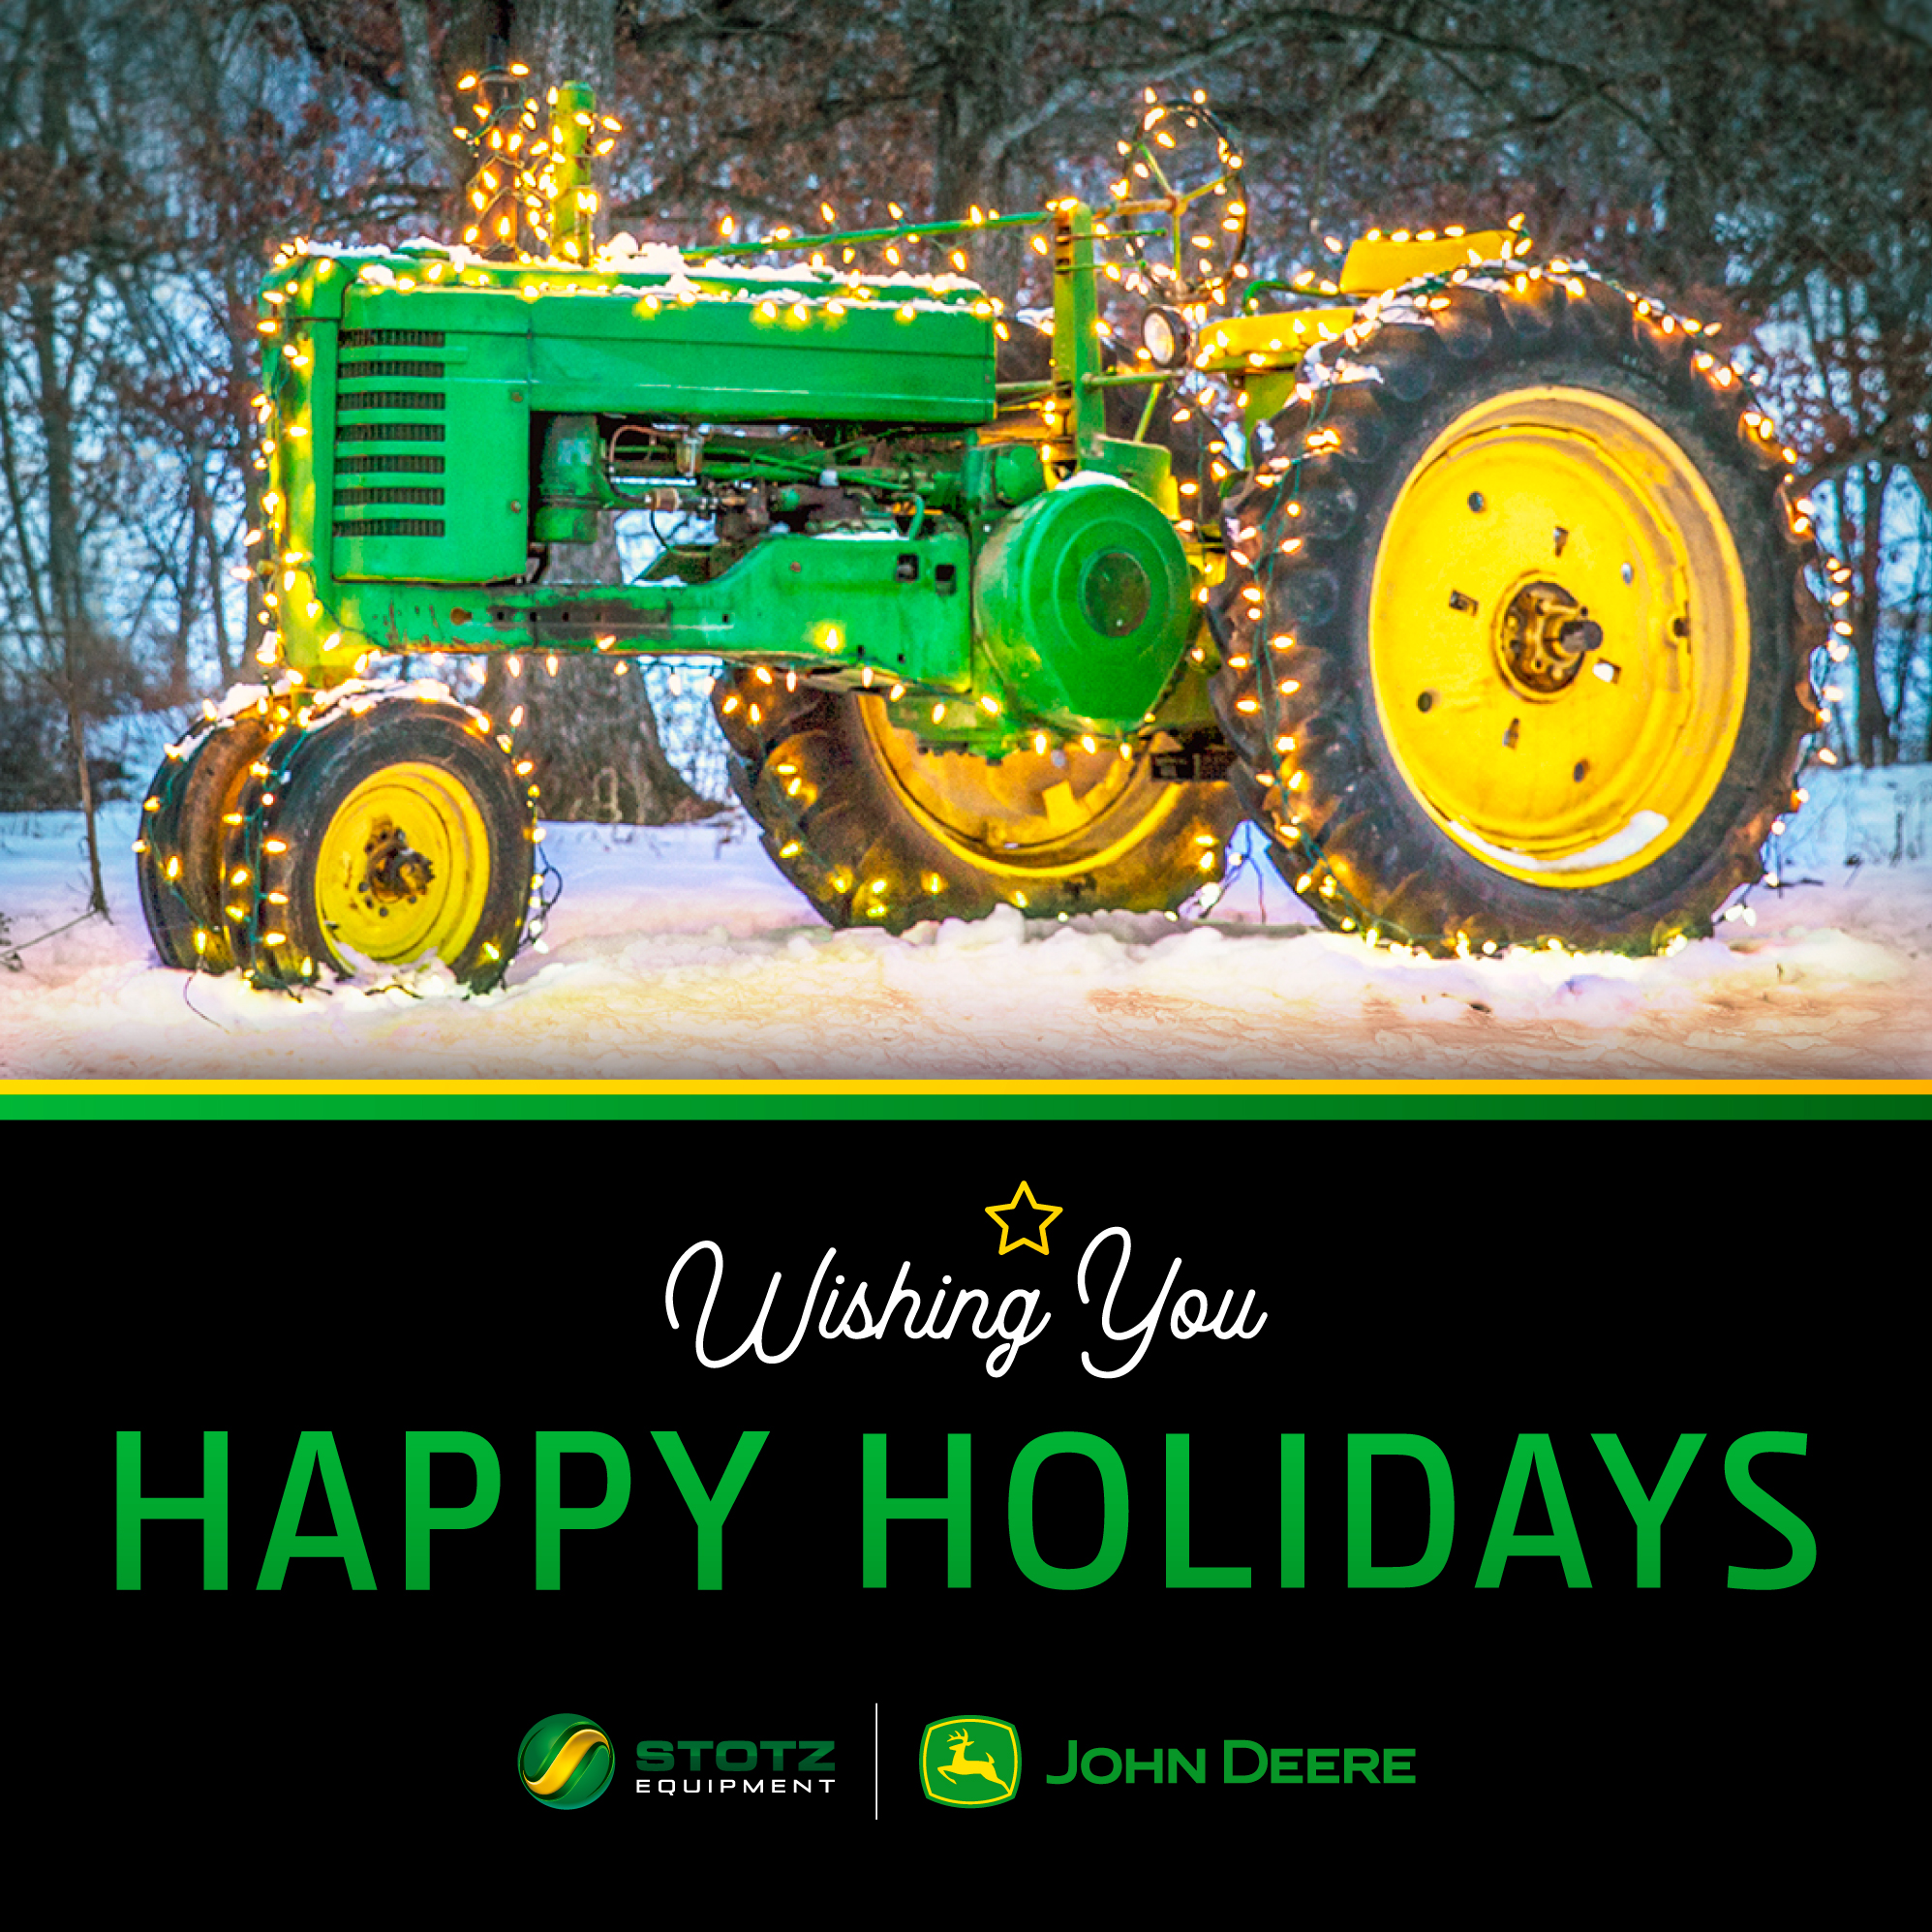 Happy Holidays from Stotz Equipment!